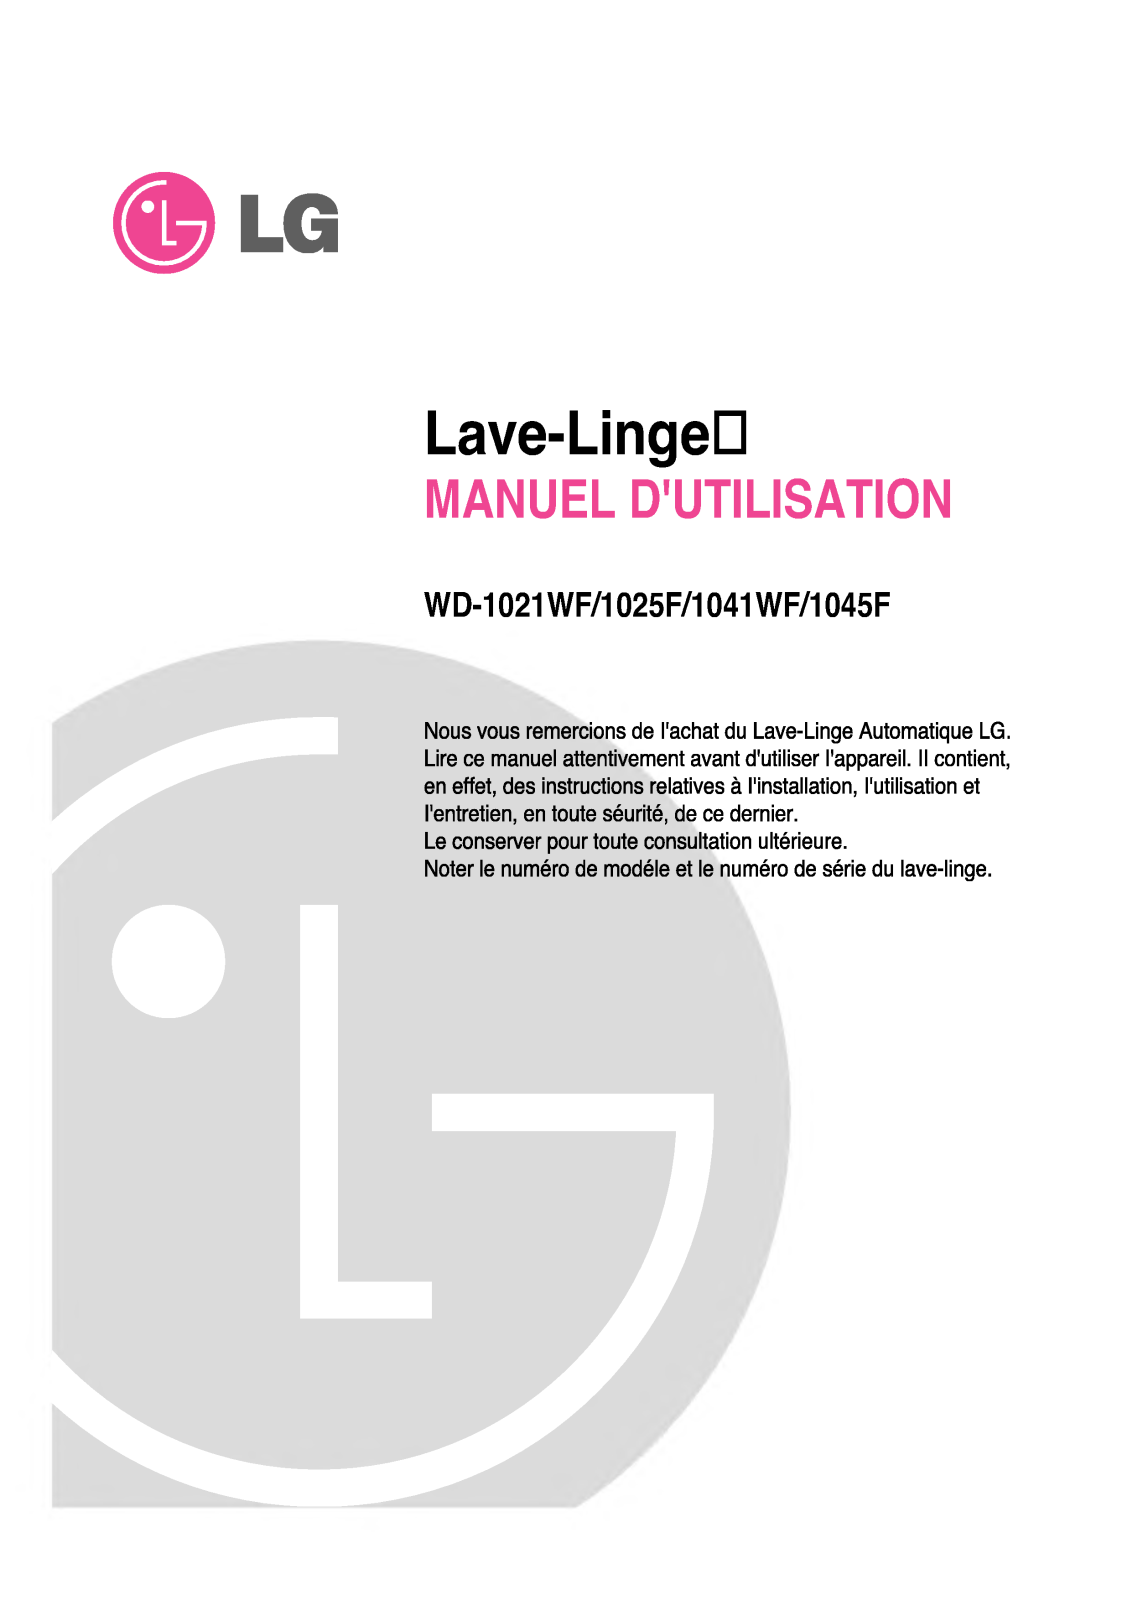 LG WD-1041W User Manual